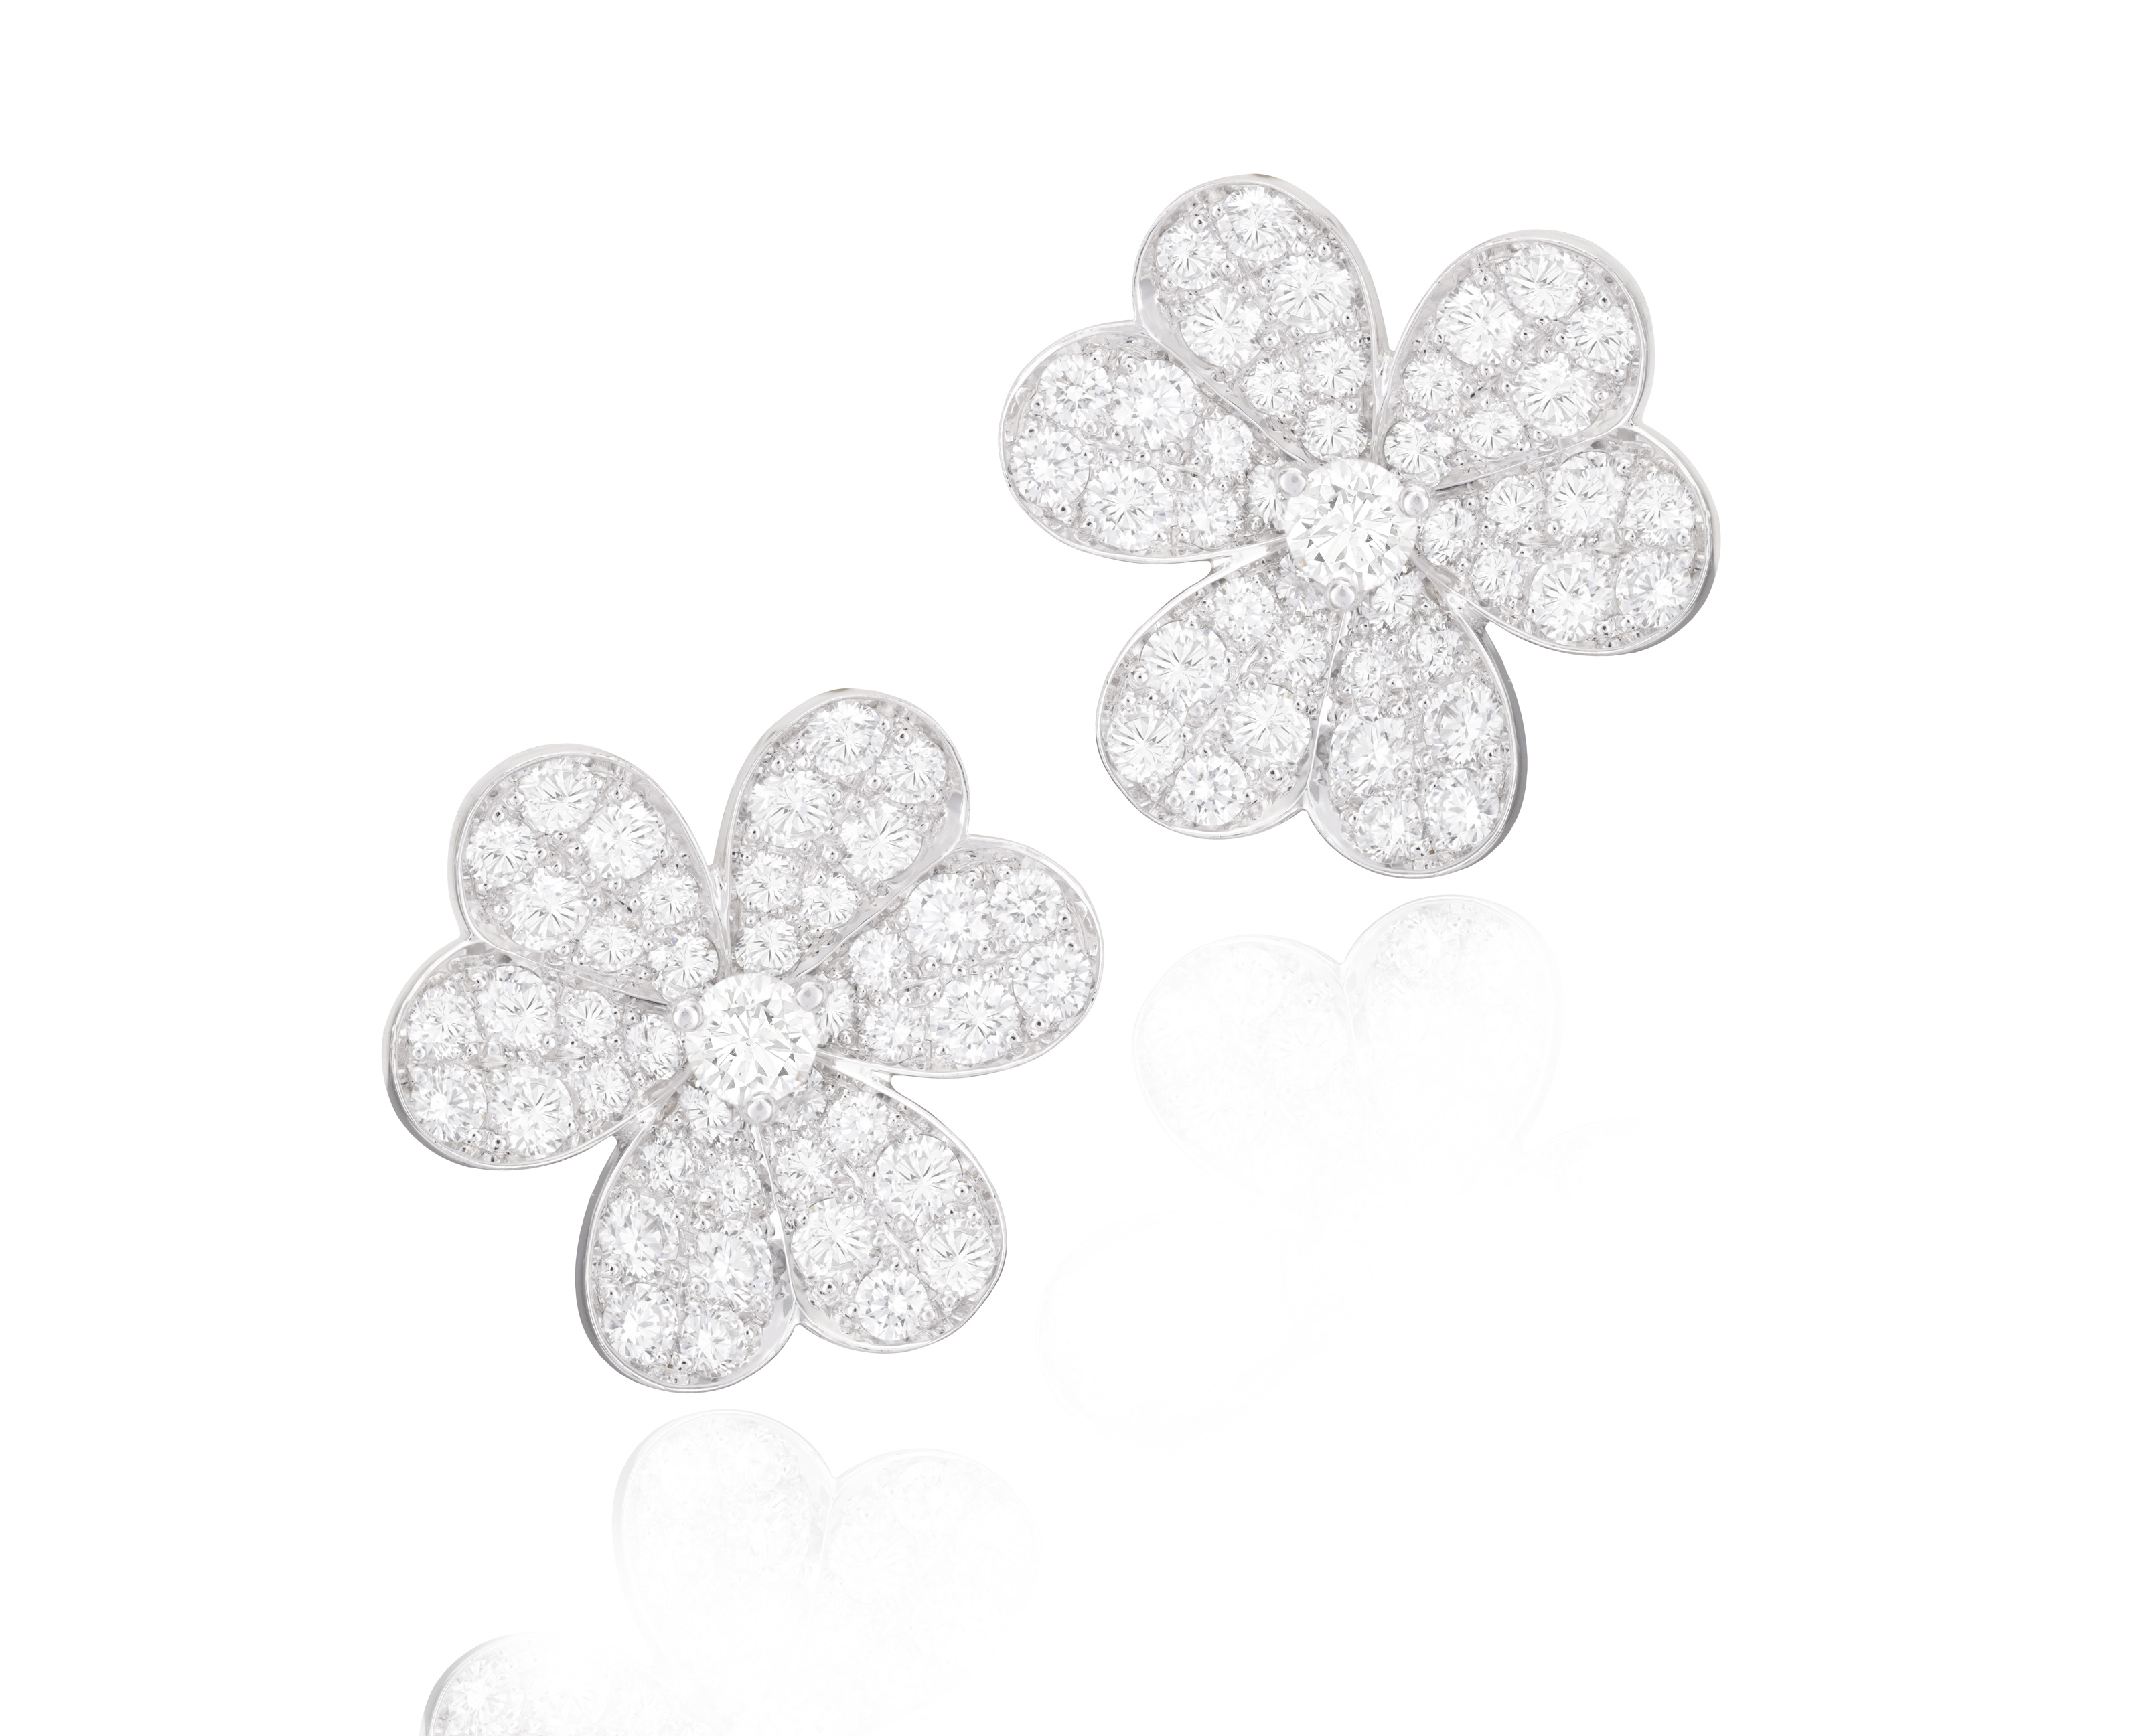 A PAIR OF DIAMOND 'FRIVOLE' EARRINGS, BY VAN CLEEF & ARPELS Each flowerhead centring a brilliant-cut